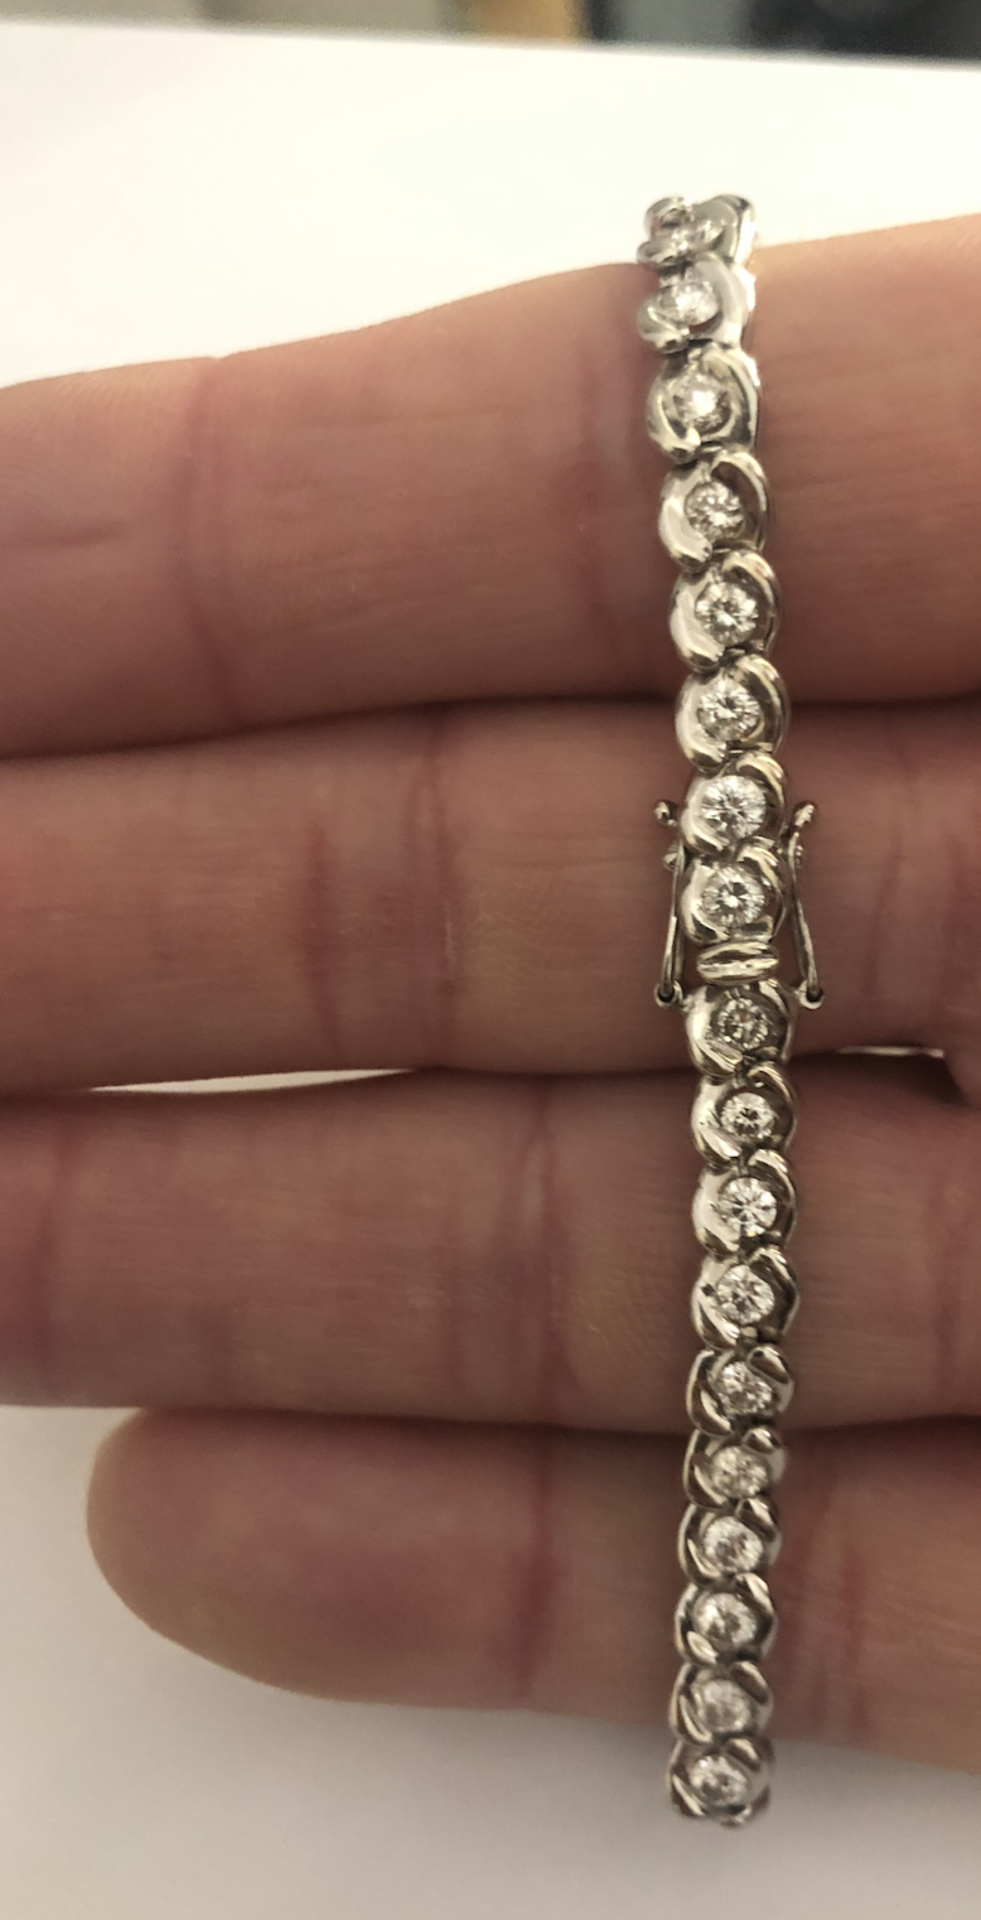 Type: Bracelet Precious Metal: 18 carat white gold Precious Stones: Diamonds Description: 18 carat